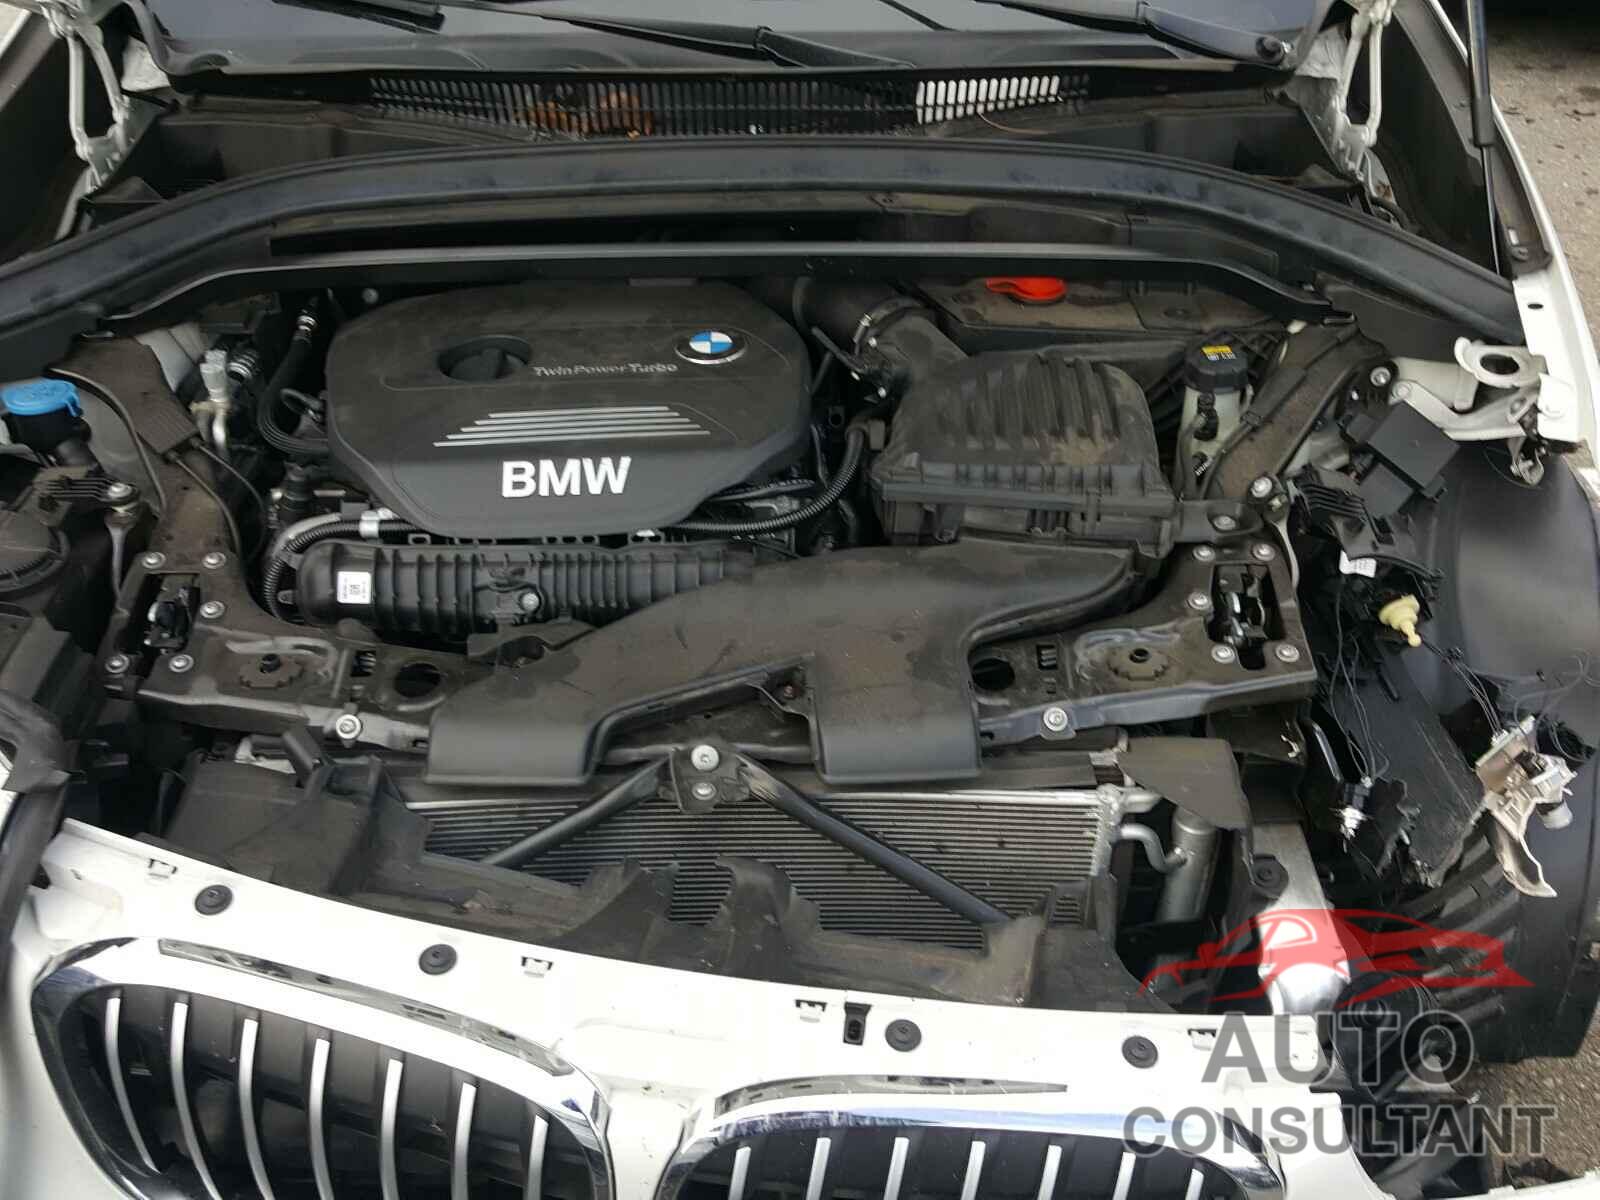 BMW X1 SDRIVE2 2017 - WBXHU7C35H5H33557